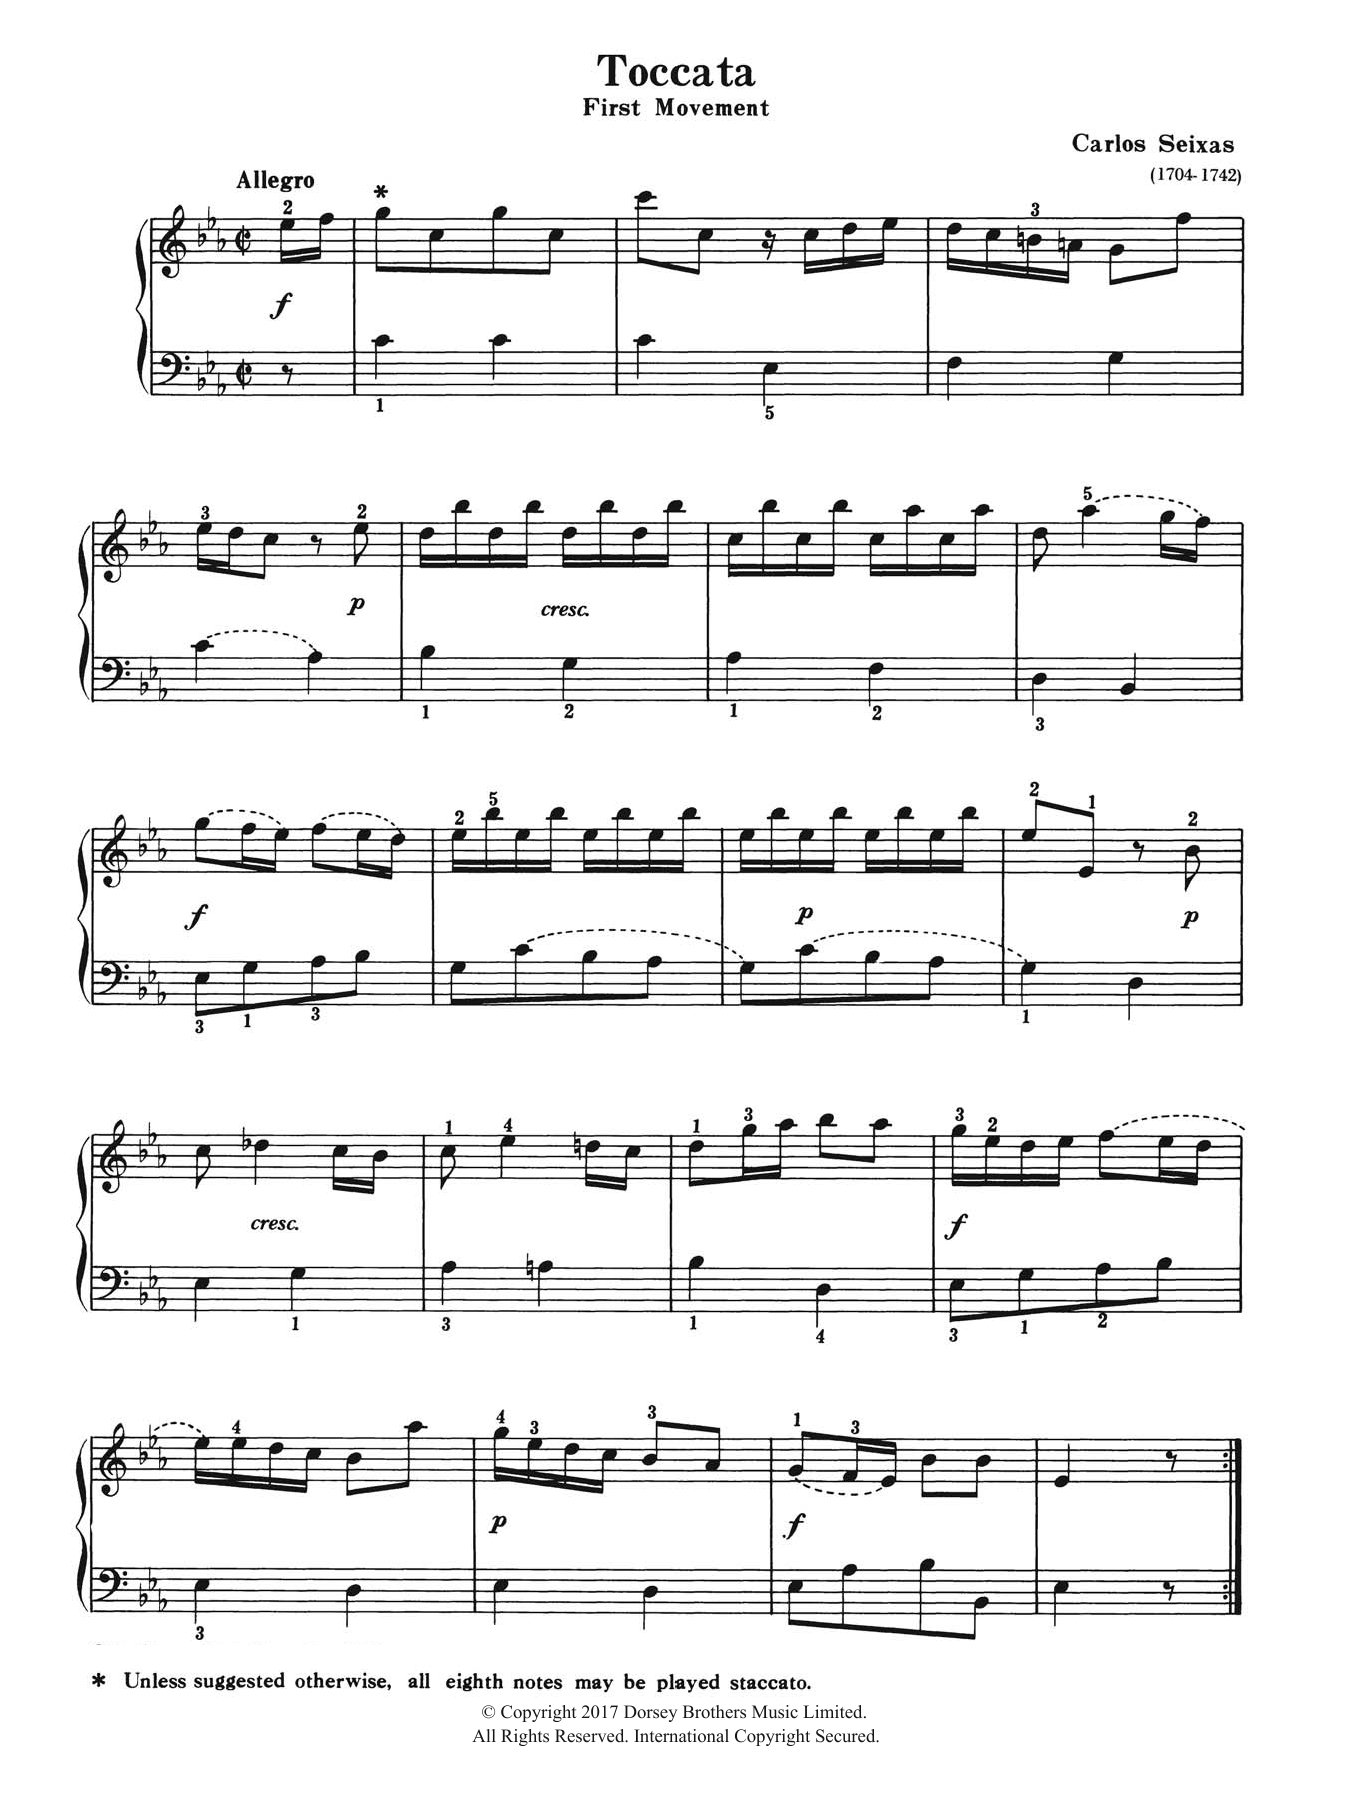 Carlos Seixas Toccata (First Movement) Sheet Music Notes & Chords for Piano - Download or Print PDF